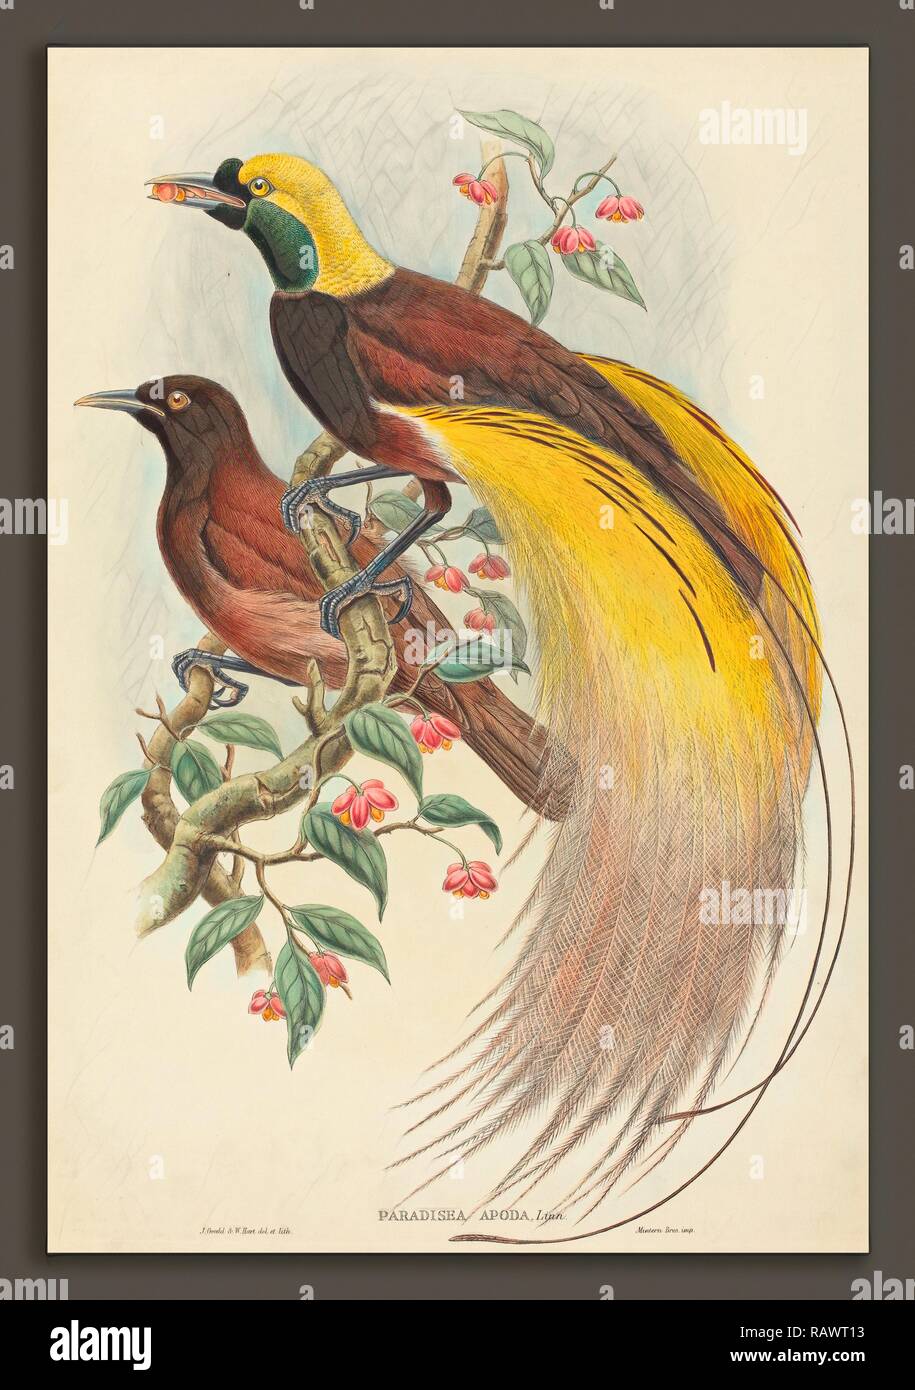 John Gould and W. Hart (British, 1804 - 1881), Bird of Paradise (Paradisea apoda), published 1875-1888, hand-colored reimagined Stock Photo